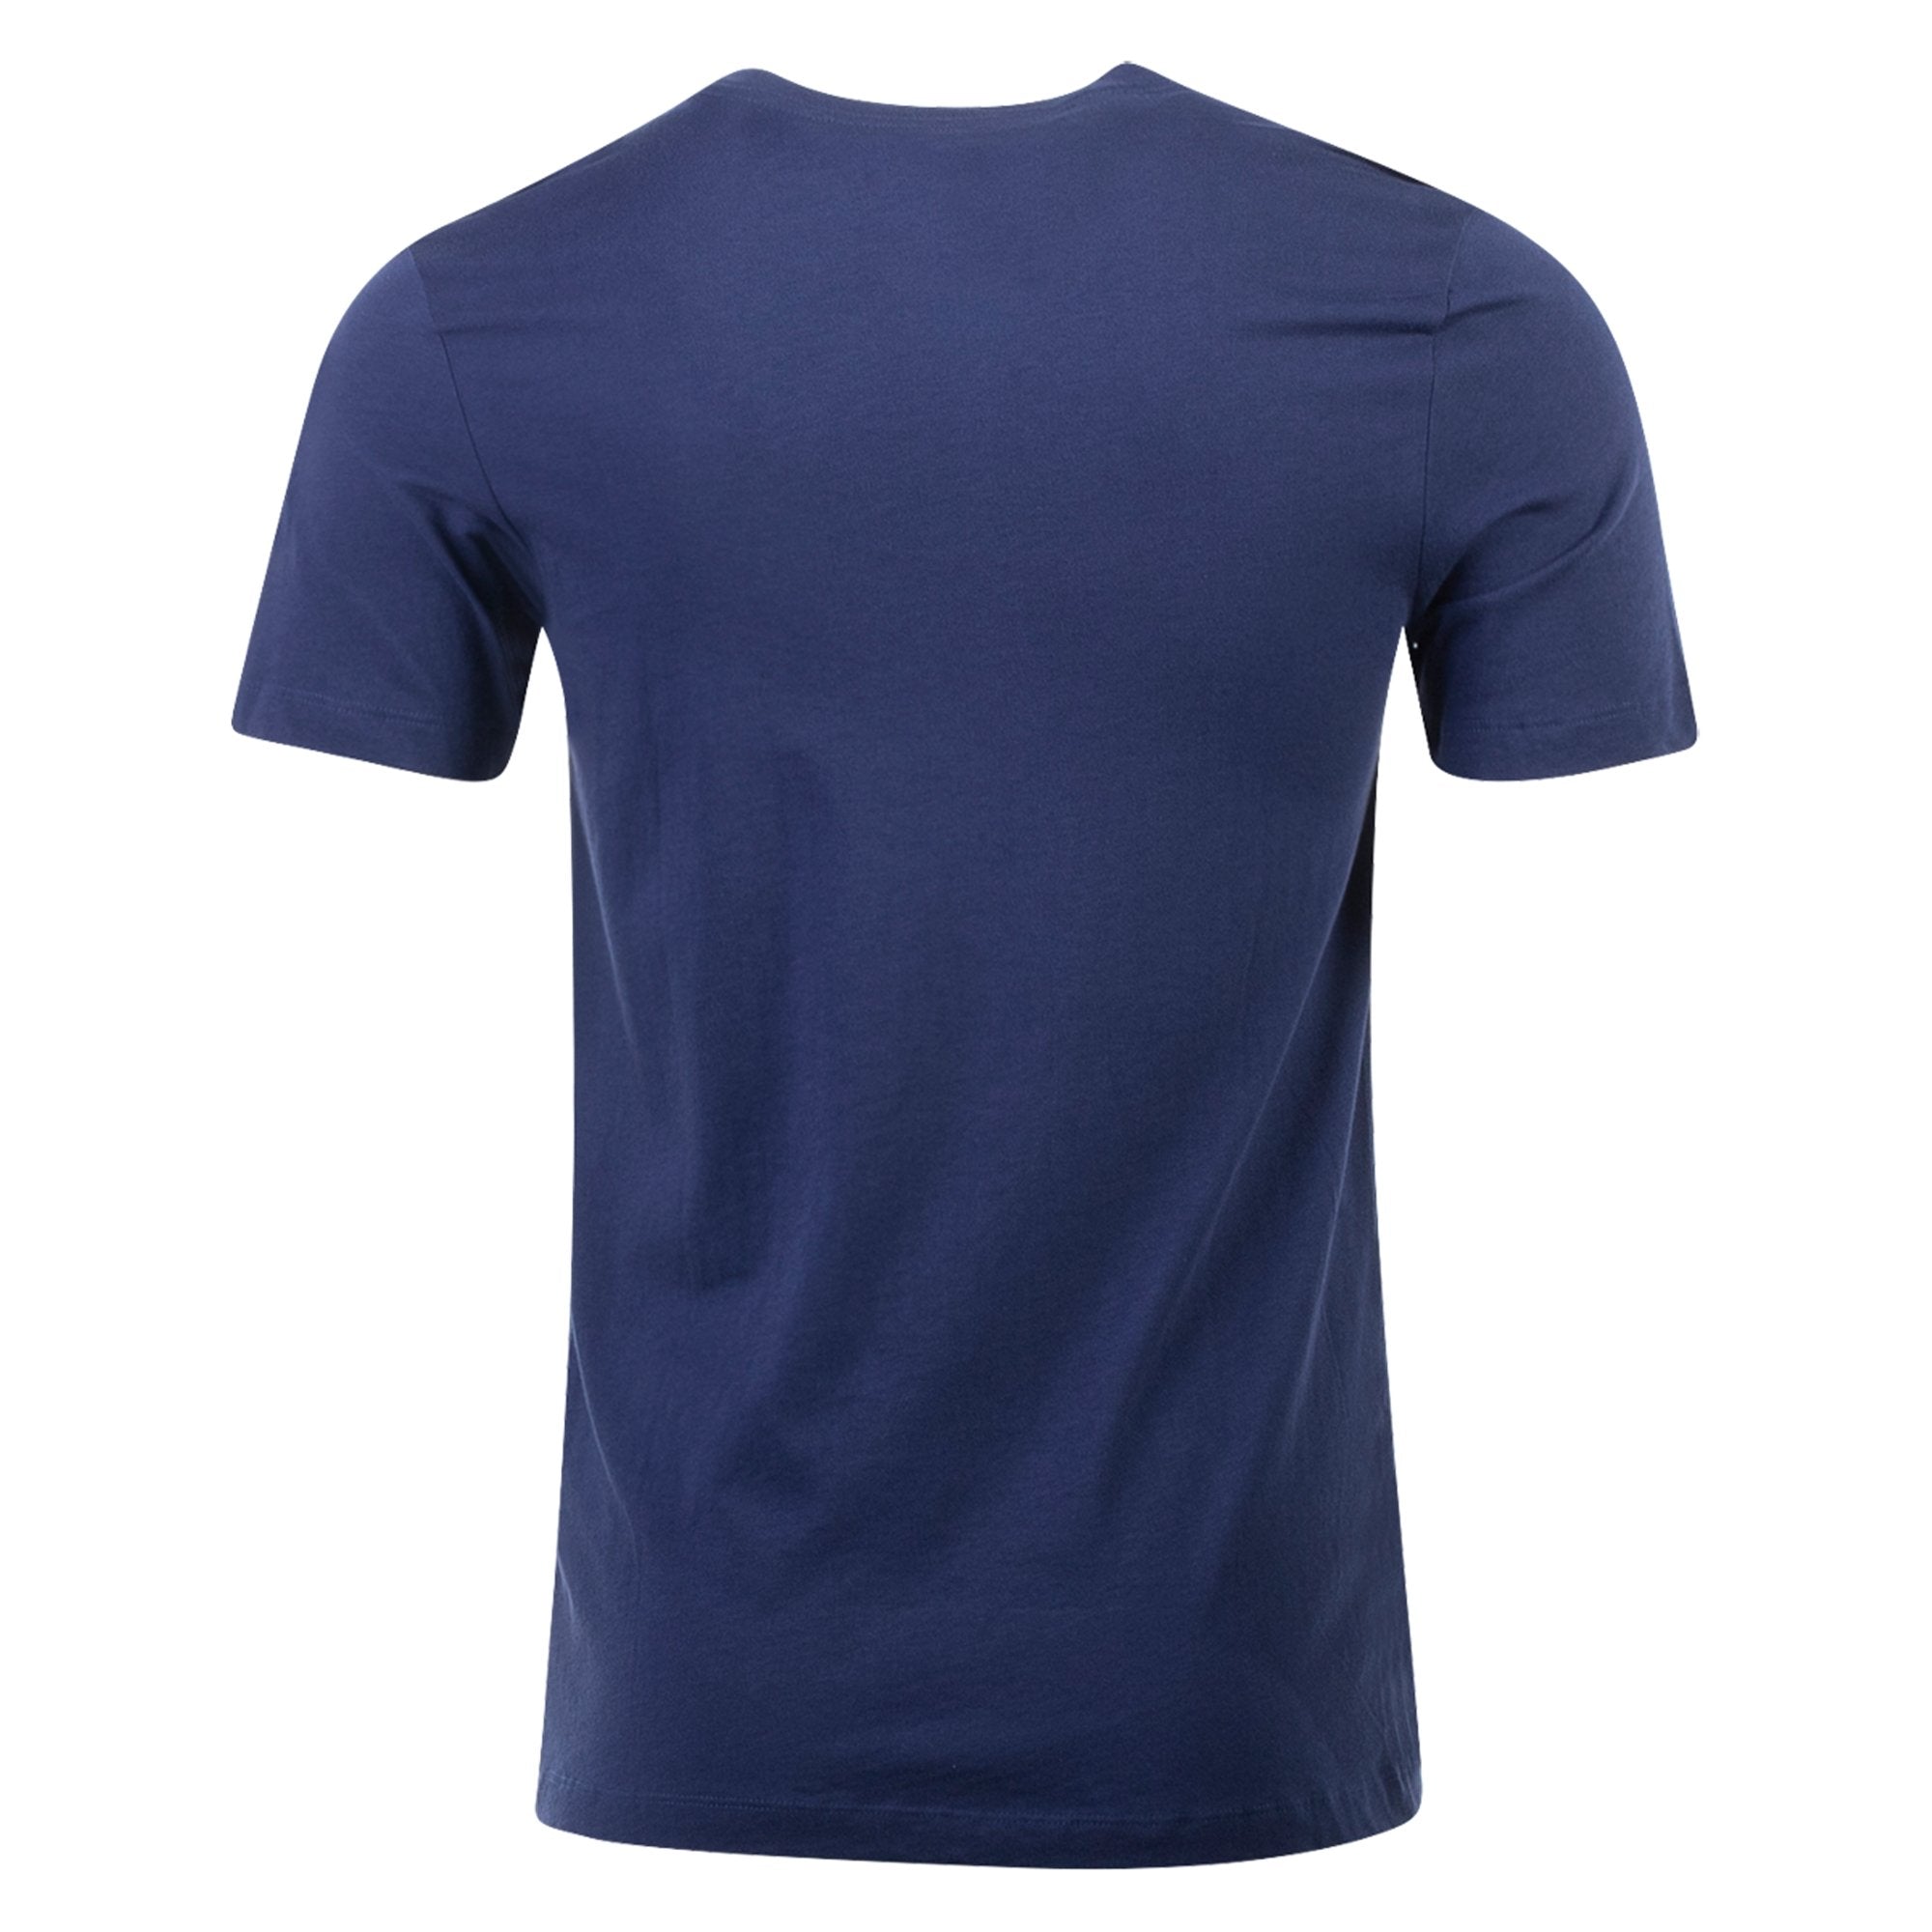 Nike Men's Paris Saint-Germain Crest Soccer T-Shirt-Navy